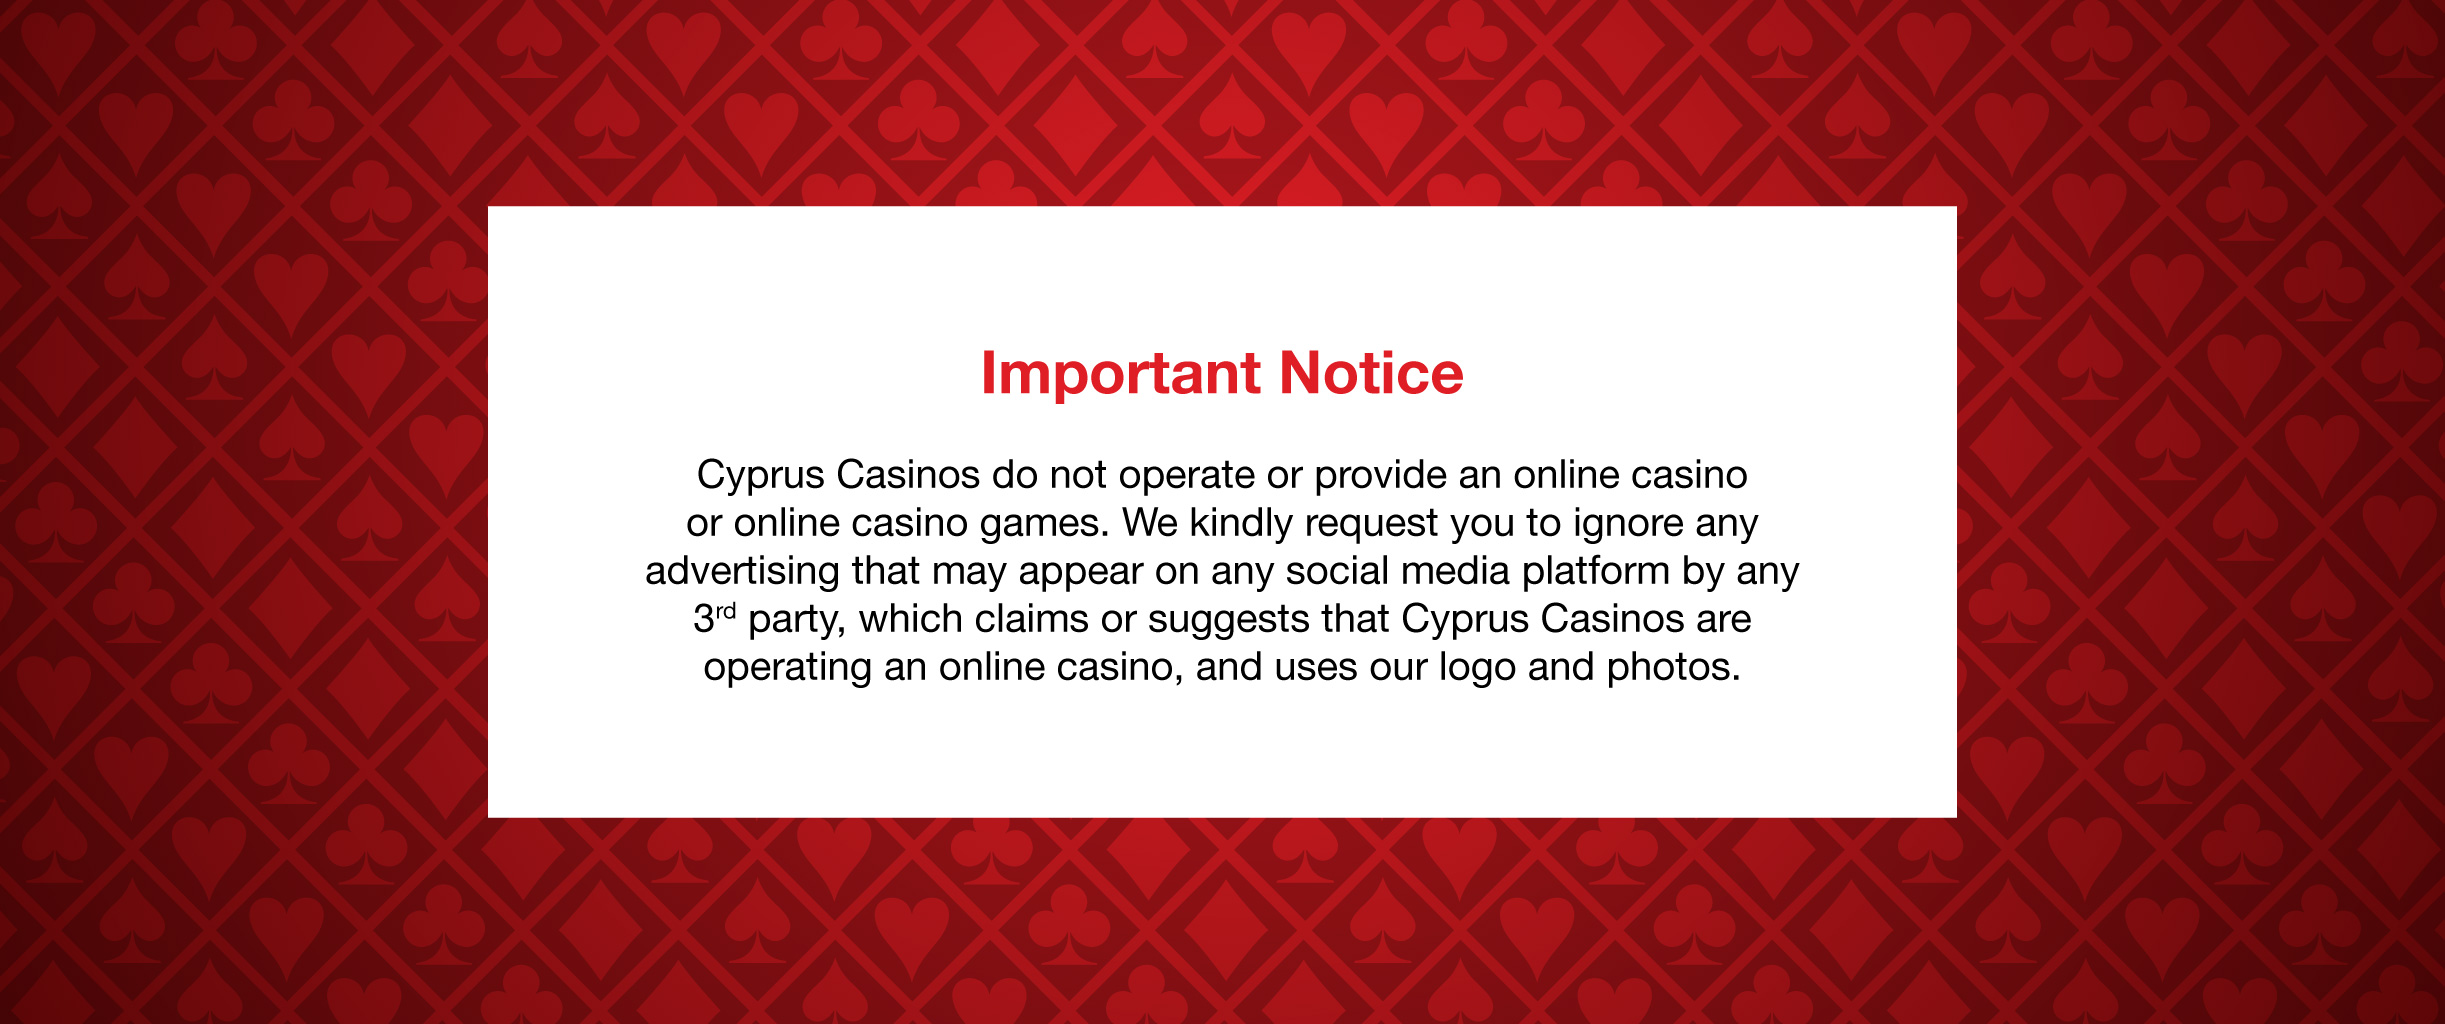 Want More Money? Start best online casinos Cyprus